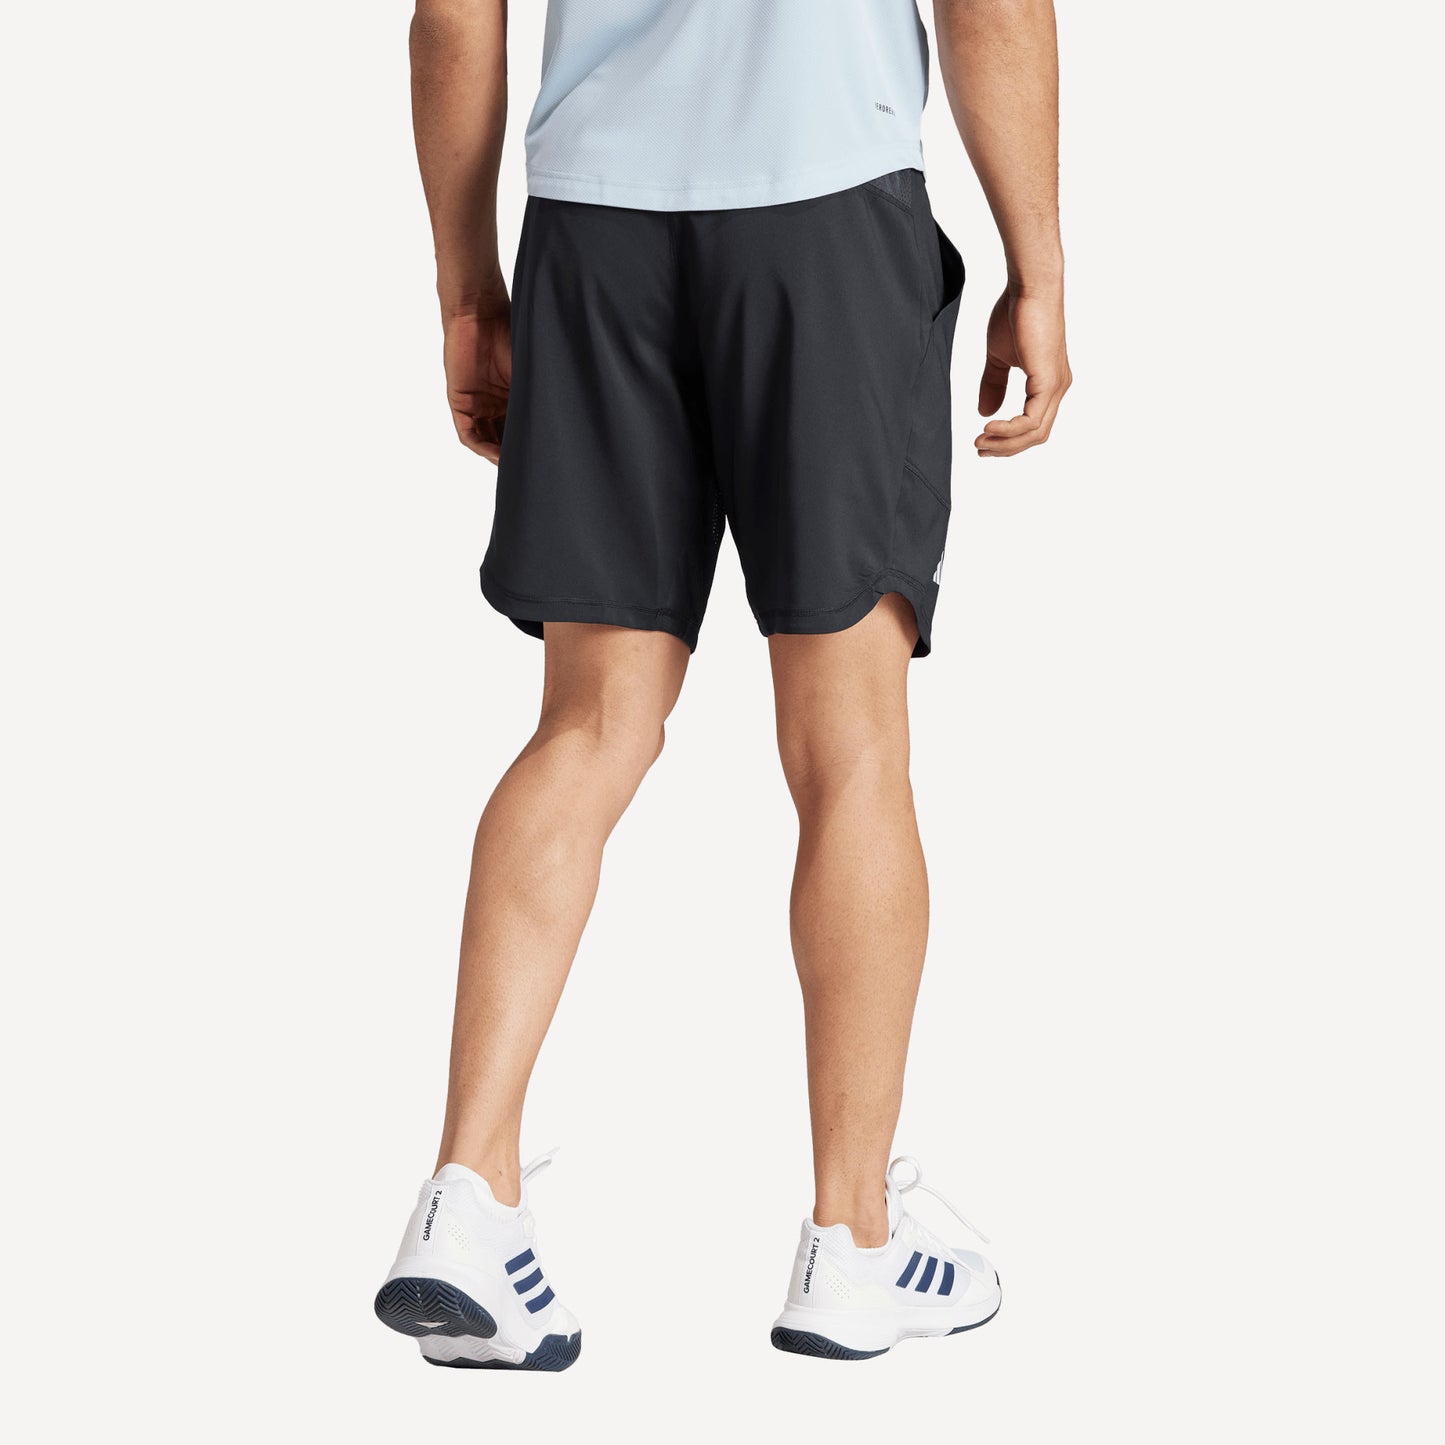 adidas New York Pro Men's 9-Inch Tennis Shorts Black (2)